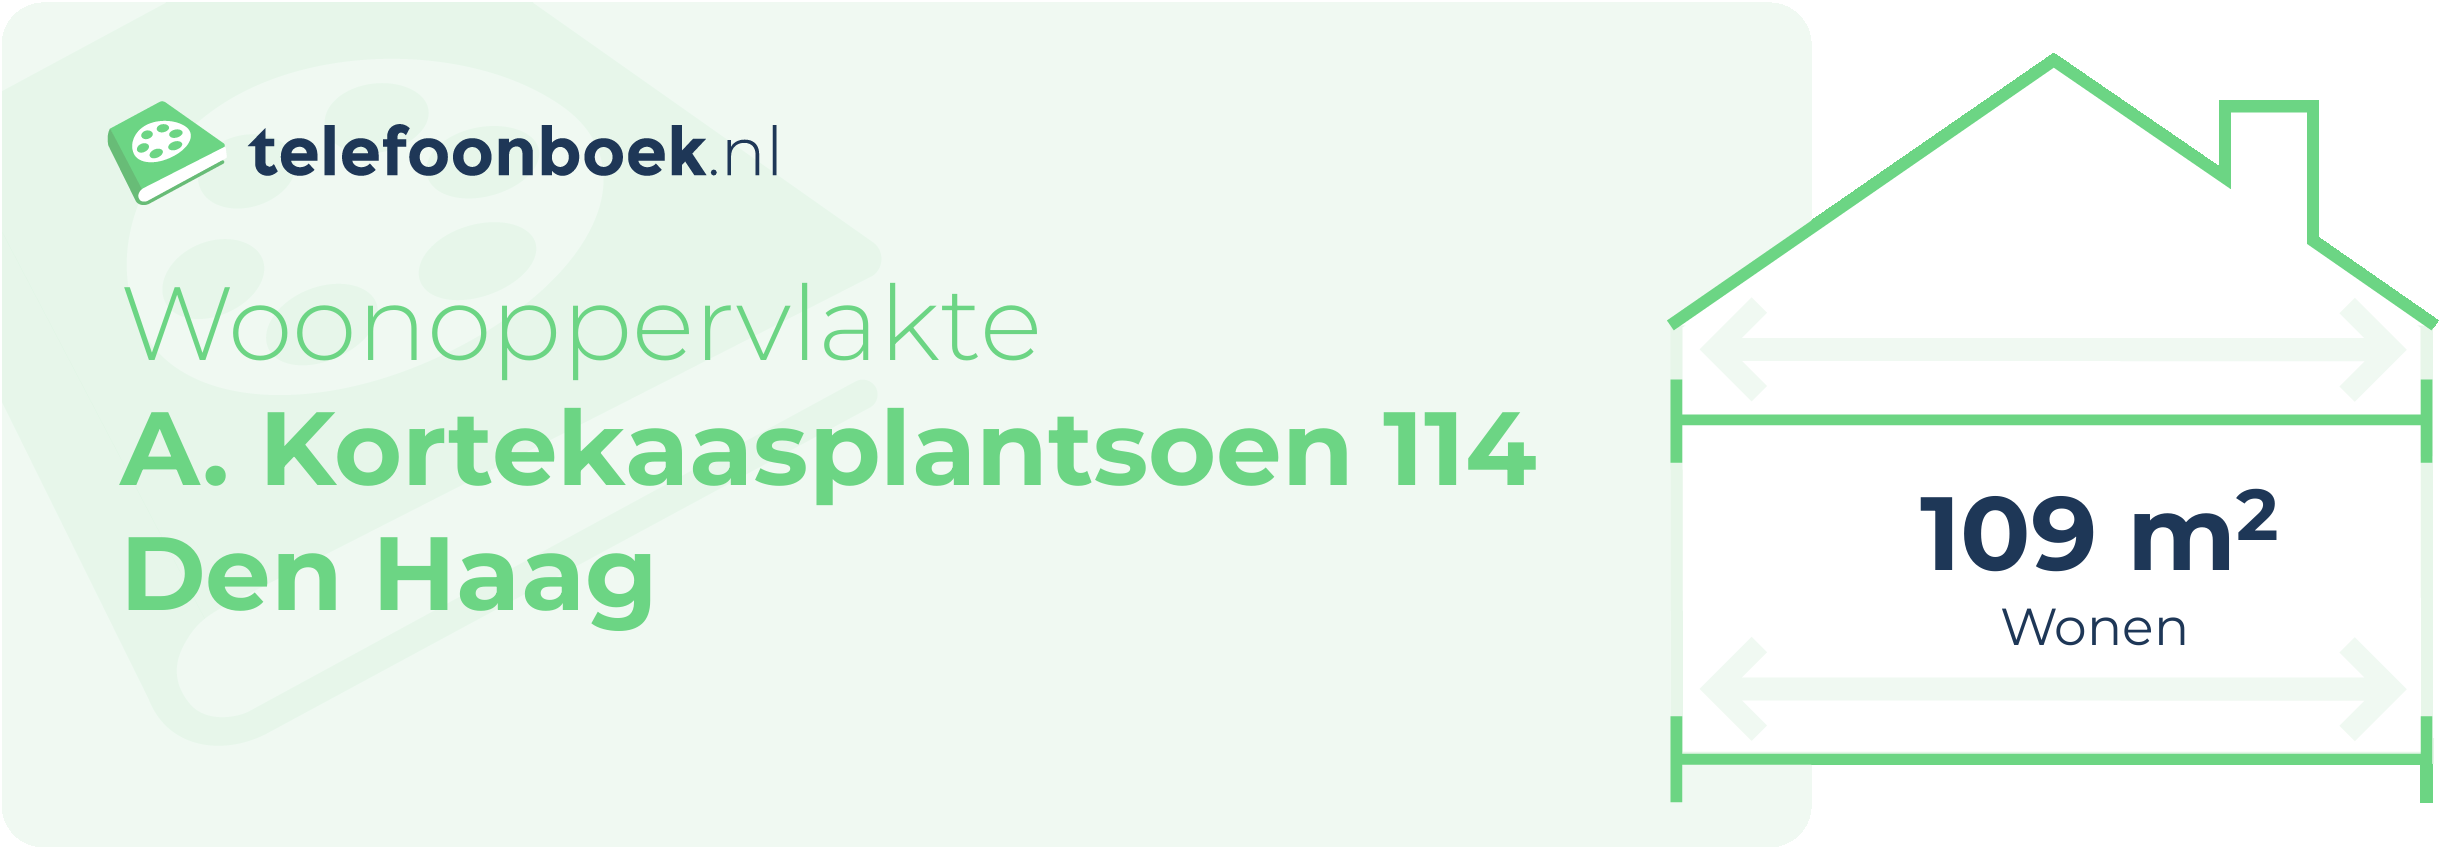 Woonoppervlakte A. Kortekaasplantsoen 114 Den Haag